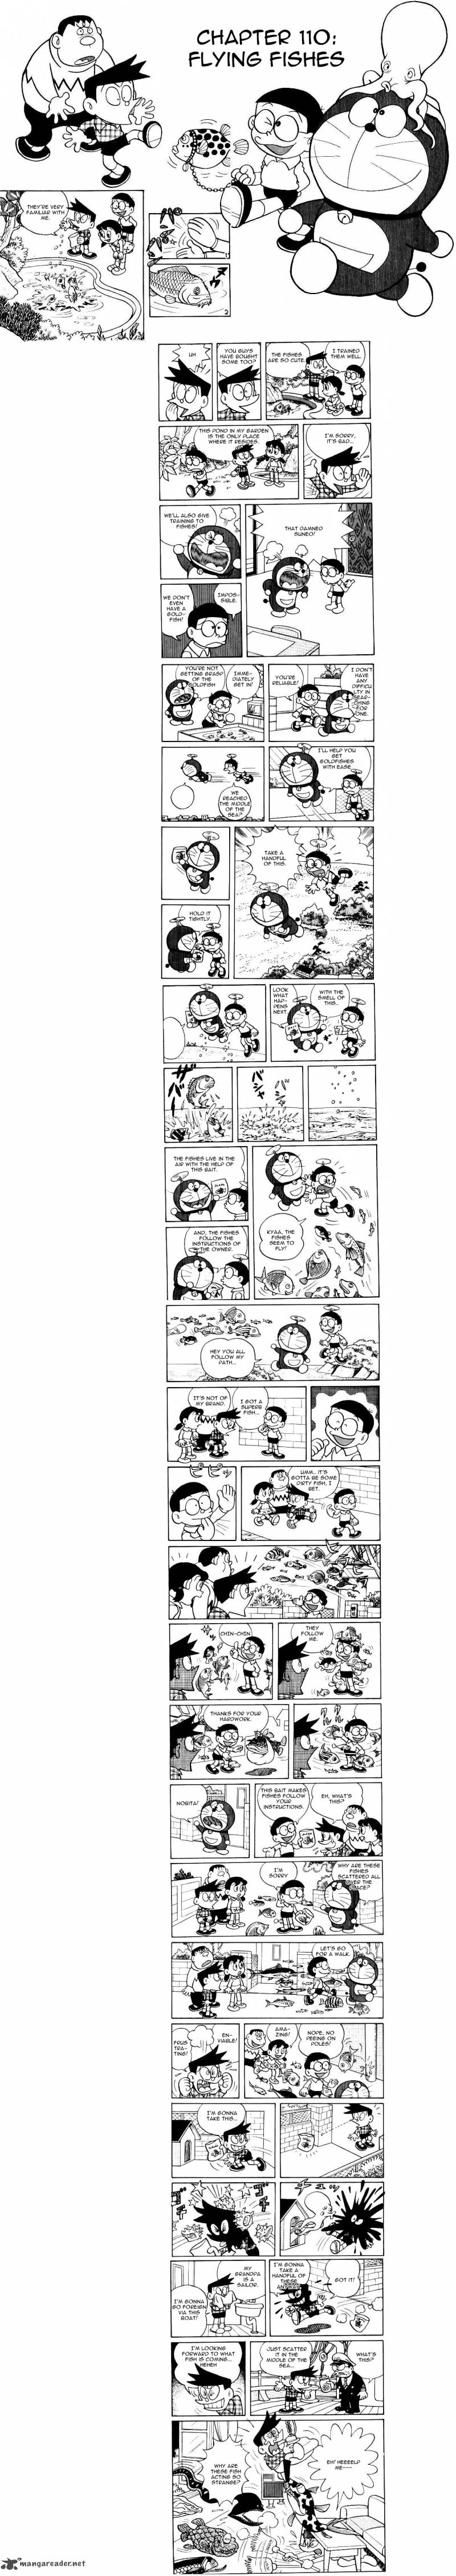 Doraemon Chapter 110 Page 1